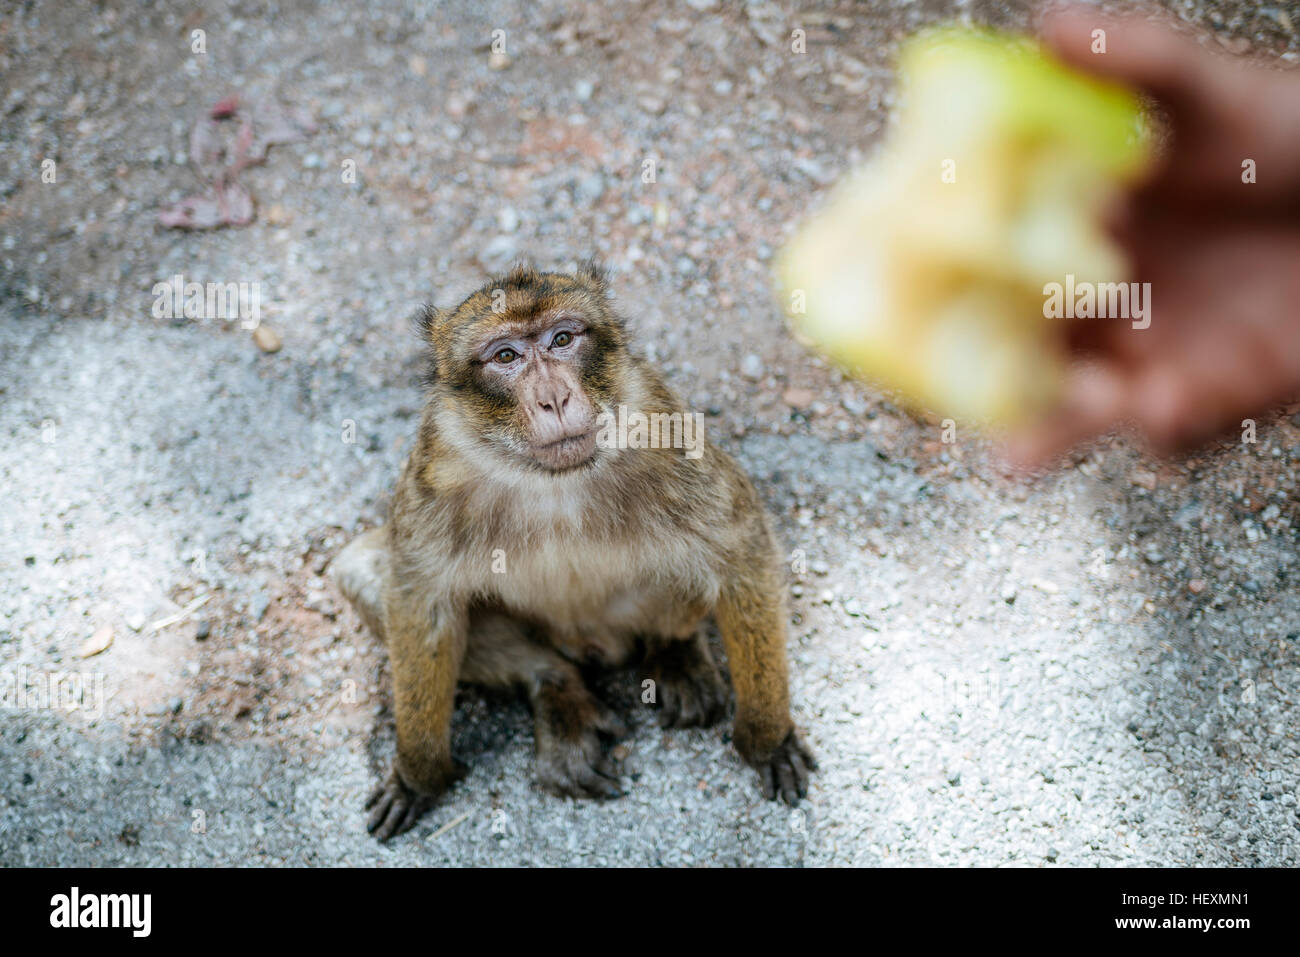 Morocco, Meknes-Tafilalet, Ifrane National Park, Barbary monkey looking at an apple Stock Photo